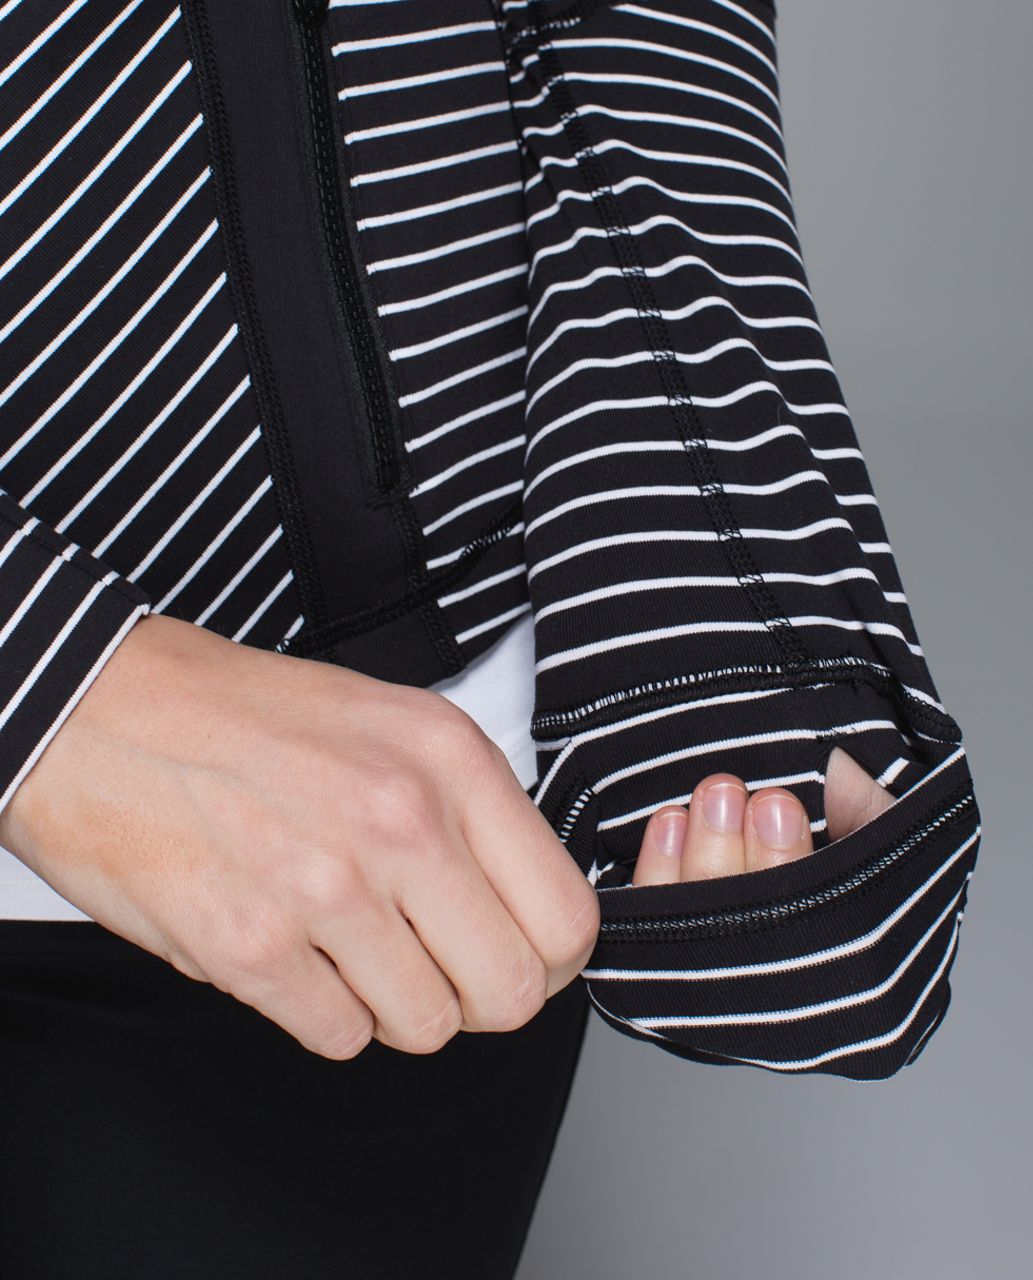 Lululemon Define Jacket - Parallel Stripe Black White / Black